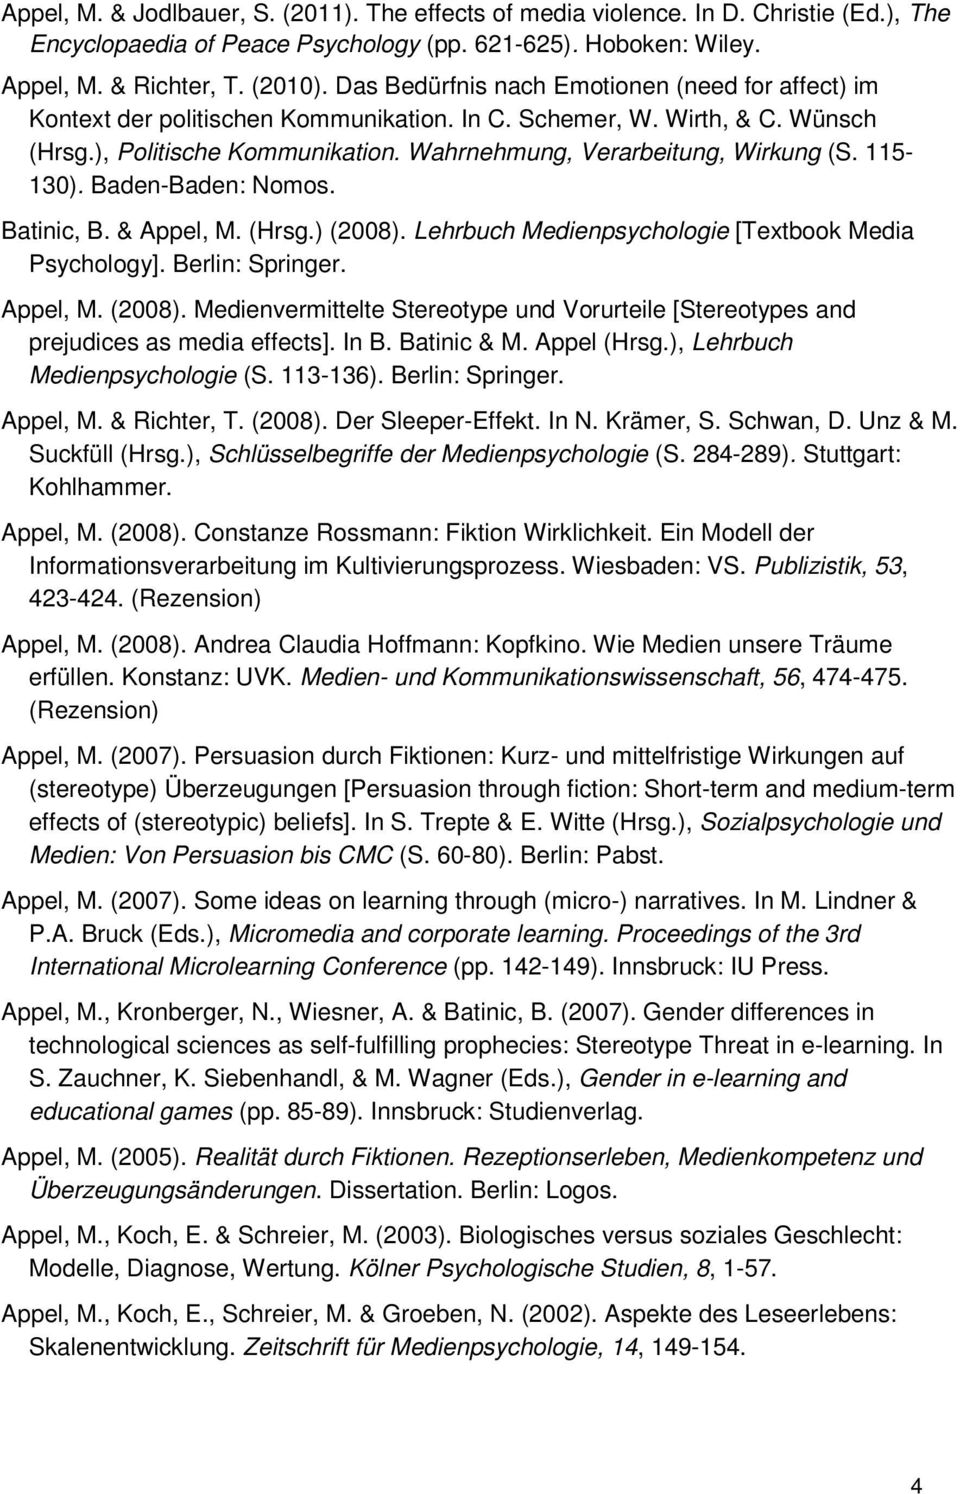 115-130). Baden-Baden: Nomos. Batinic, B. & Appel, M. (Hrsg.) (2008). Lehrbuch Medienpsychologie [Textbook Media Psychology]. Berlin: Springer. Appel, M. (2008). Medienvermittelte Stereotype und Vorurteile [Stereotypes and prejudices as media effects].